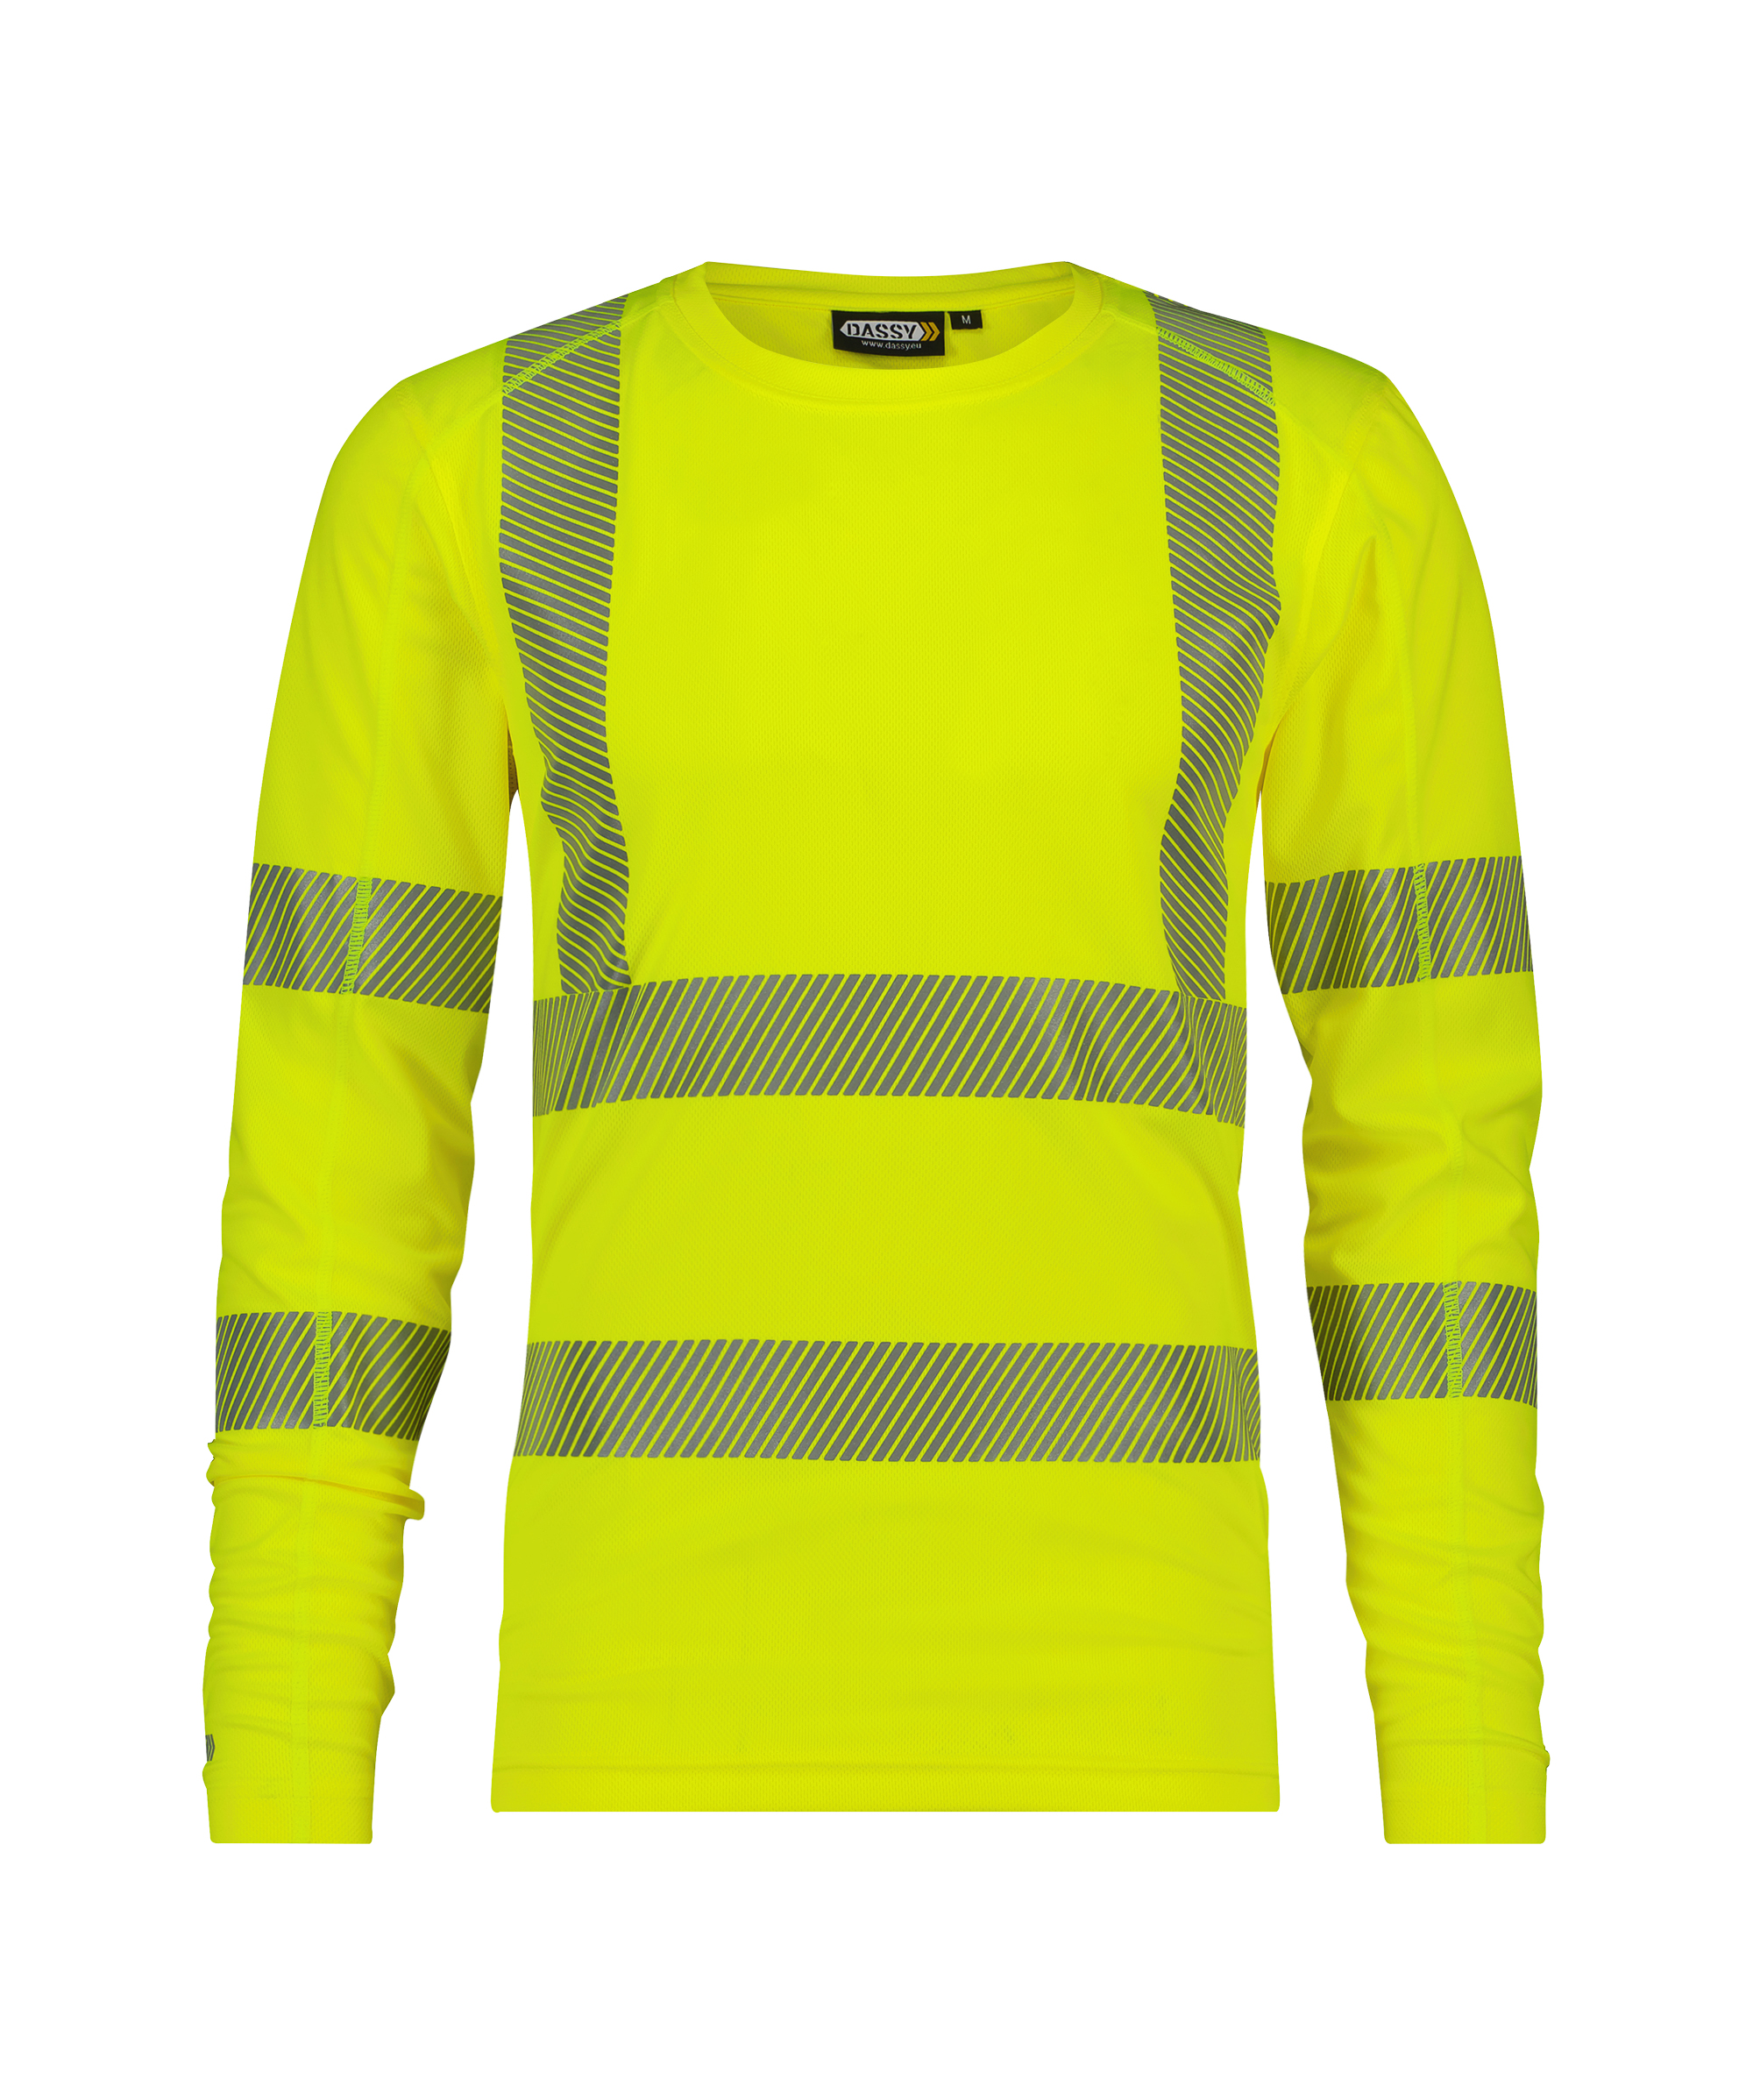 Dassy OMAHA High Visibility Work Trouser Yellow/Navy 